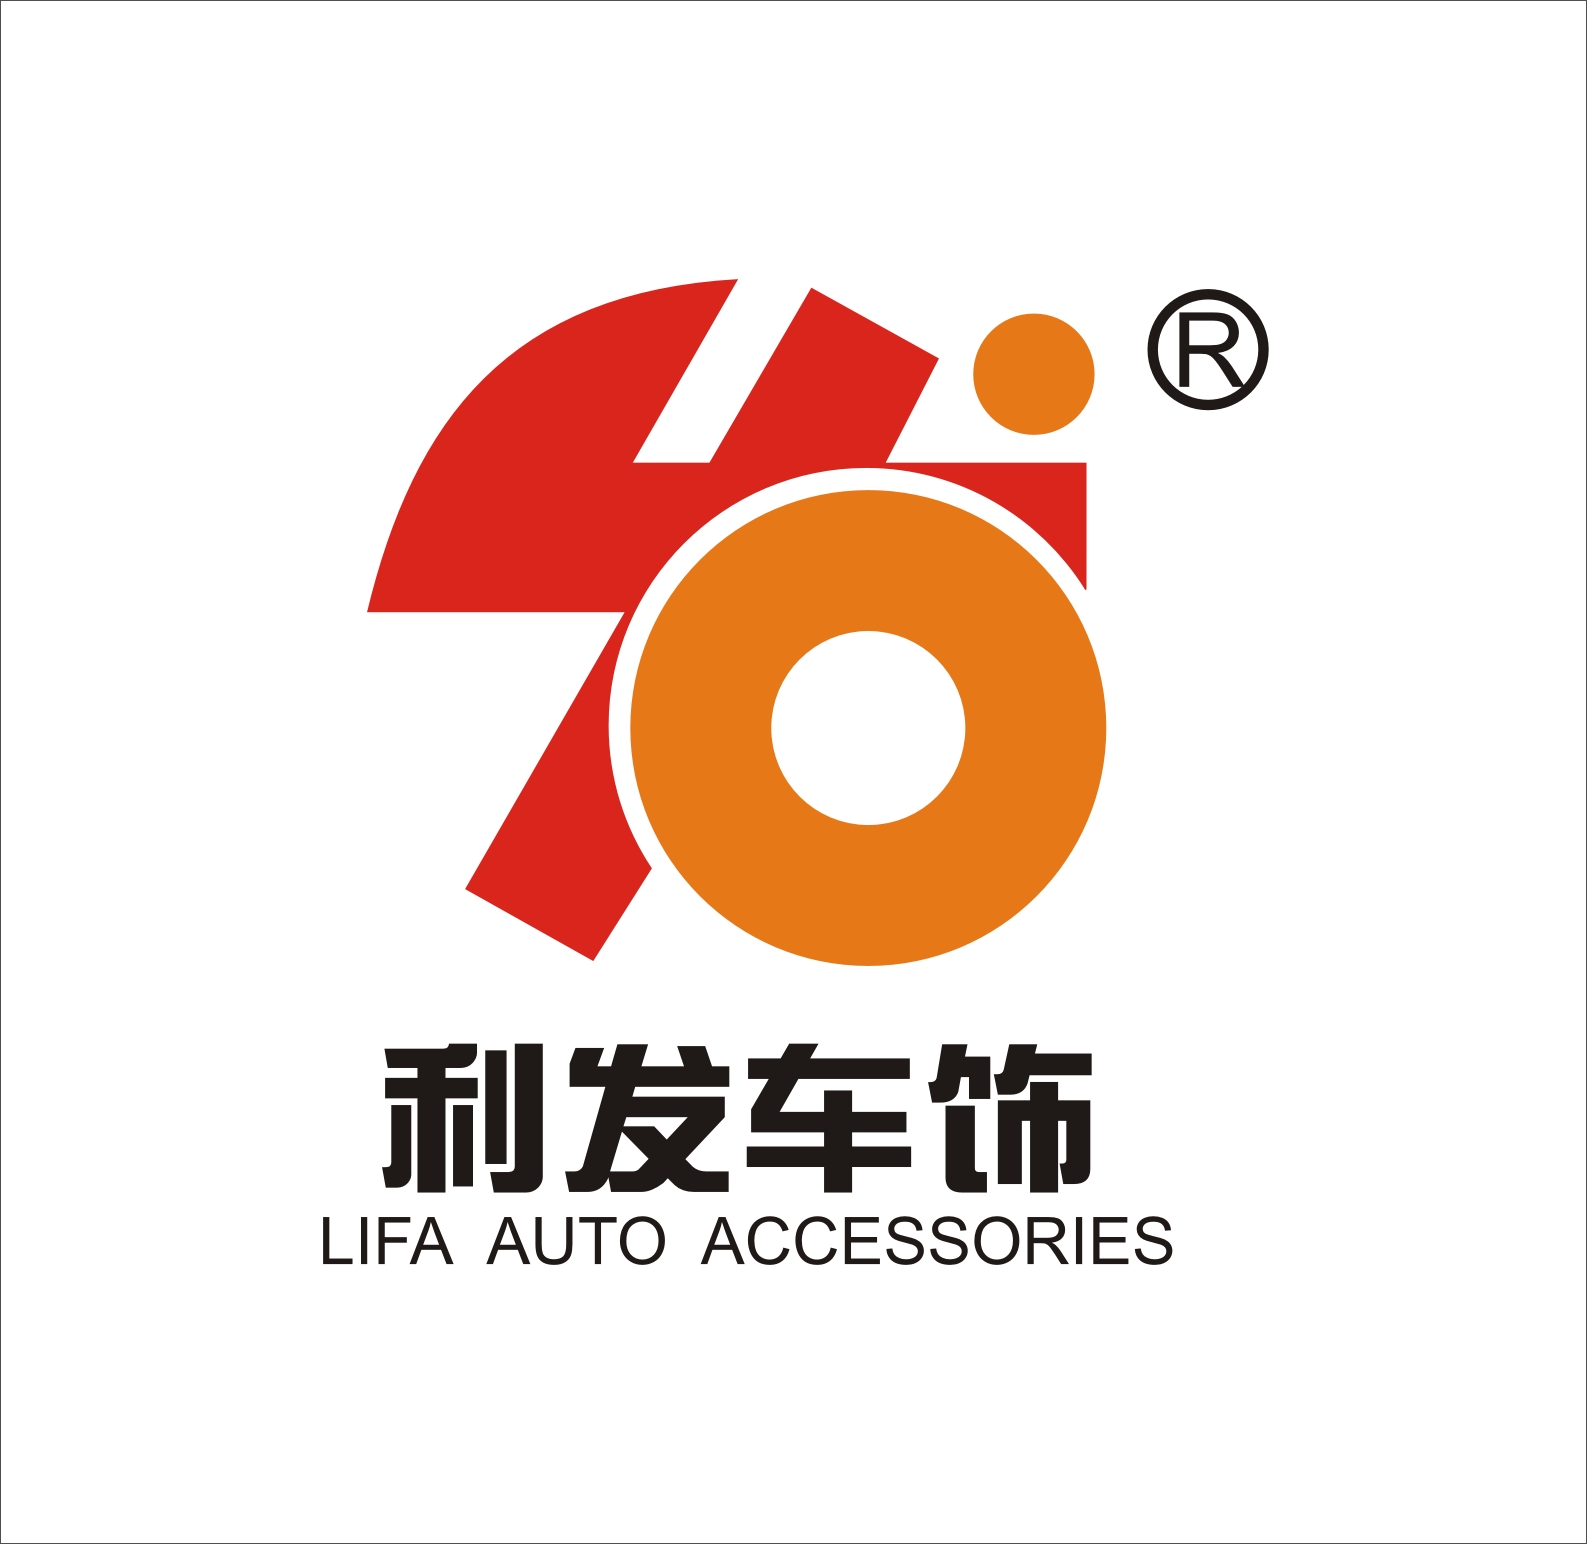 ZHEJIANG TIANTAI LIFA AUTO ACCESSORIES CO.,LTD.